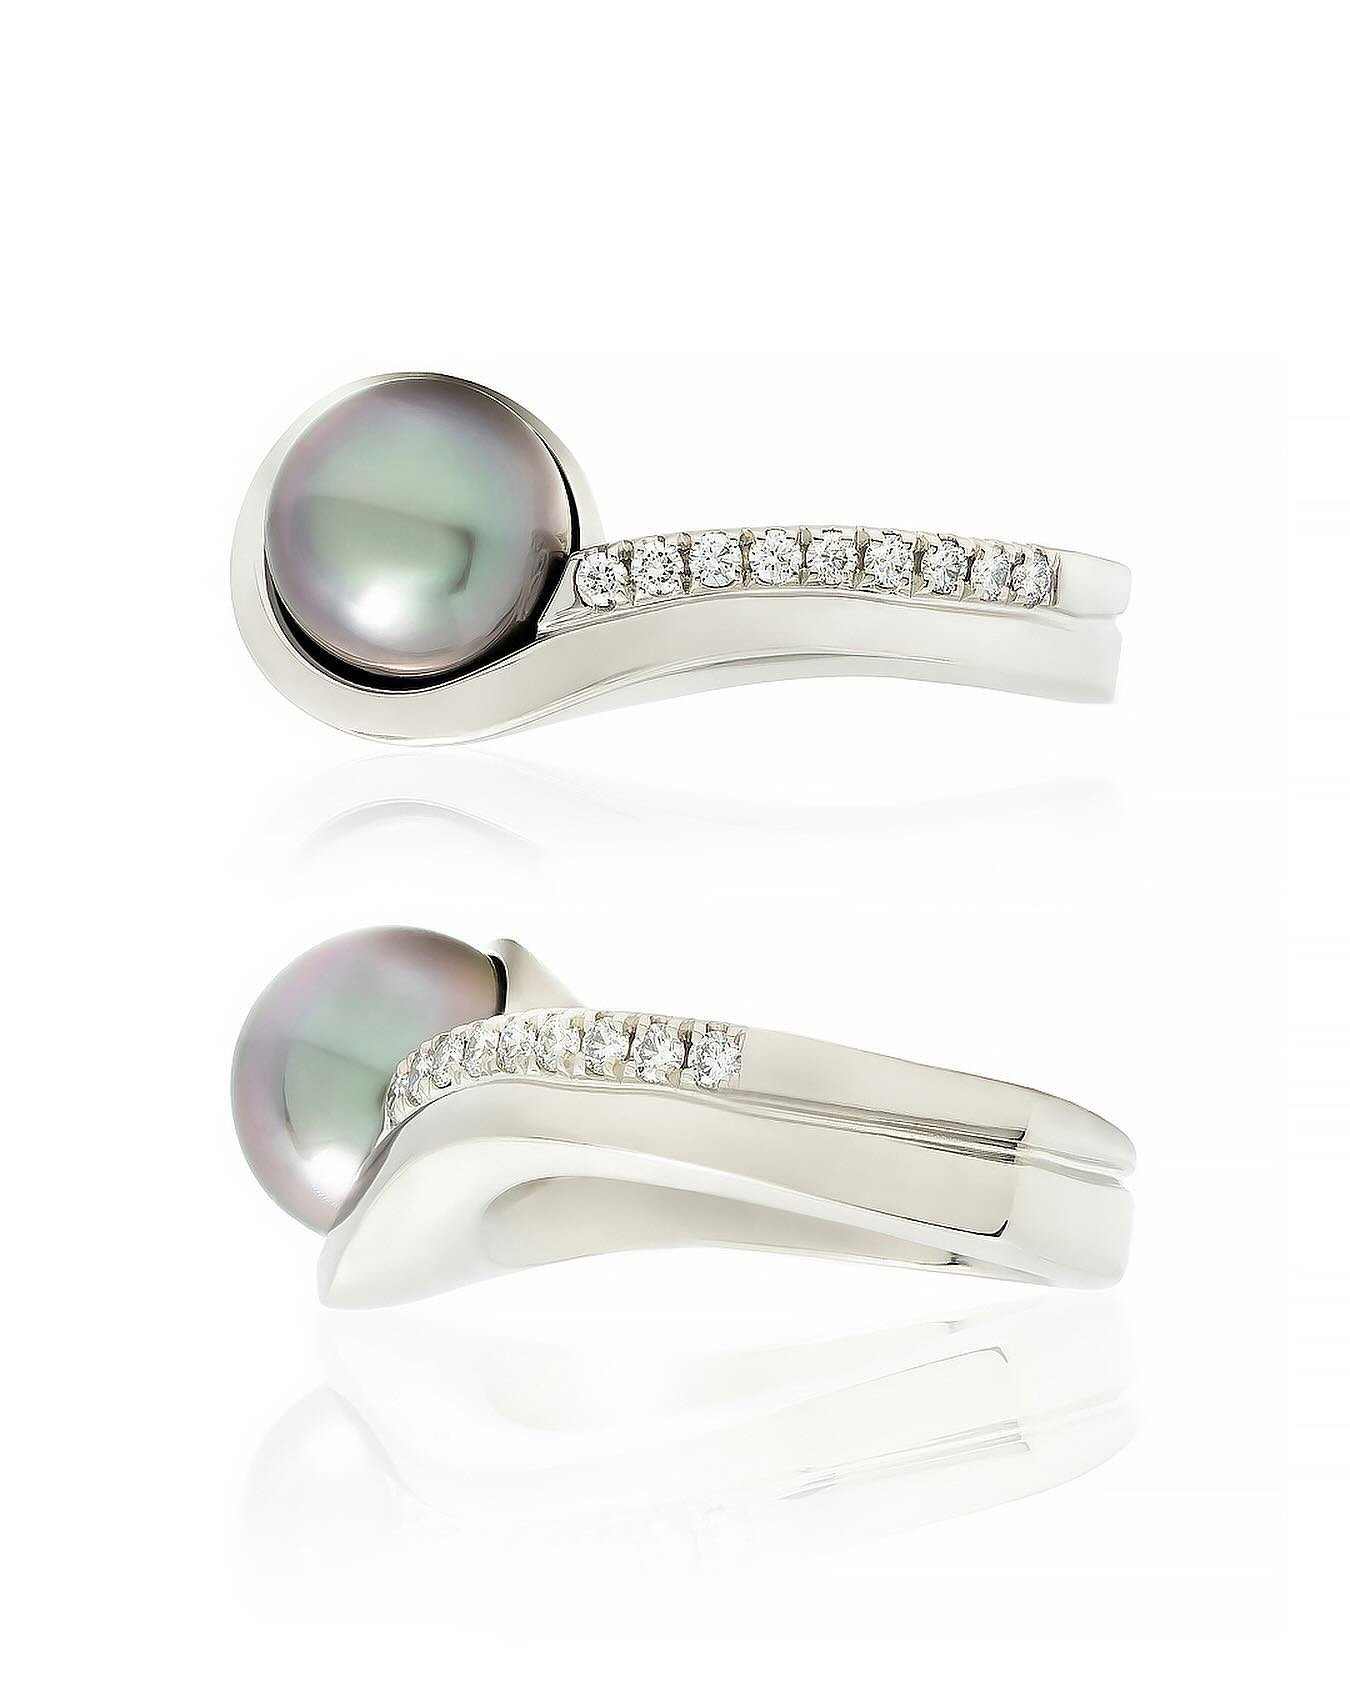 Pearl &amp; Diamond Ring

Pearl : Black Tahitian - 10mm
Diamonds : .18ctw - VS1 - D/E
14kt White Gold
$6,000

Big Island Jewelers
Fine Jewelry - Made by Hand
#madeinhawaii